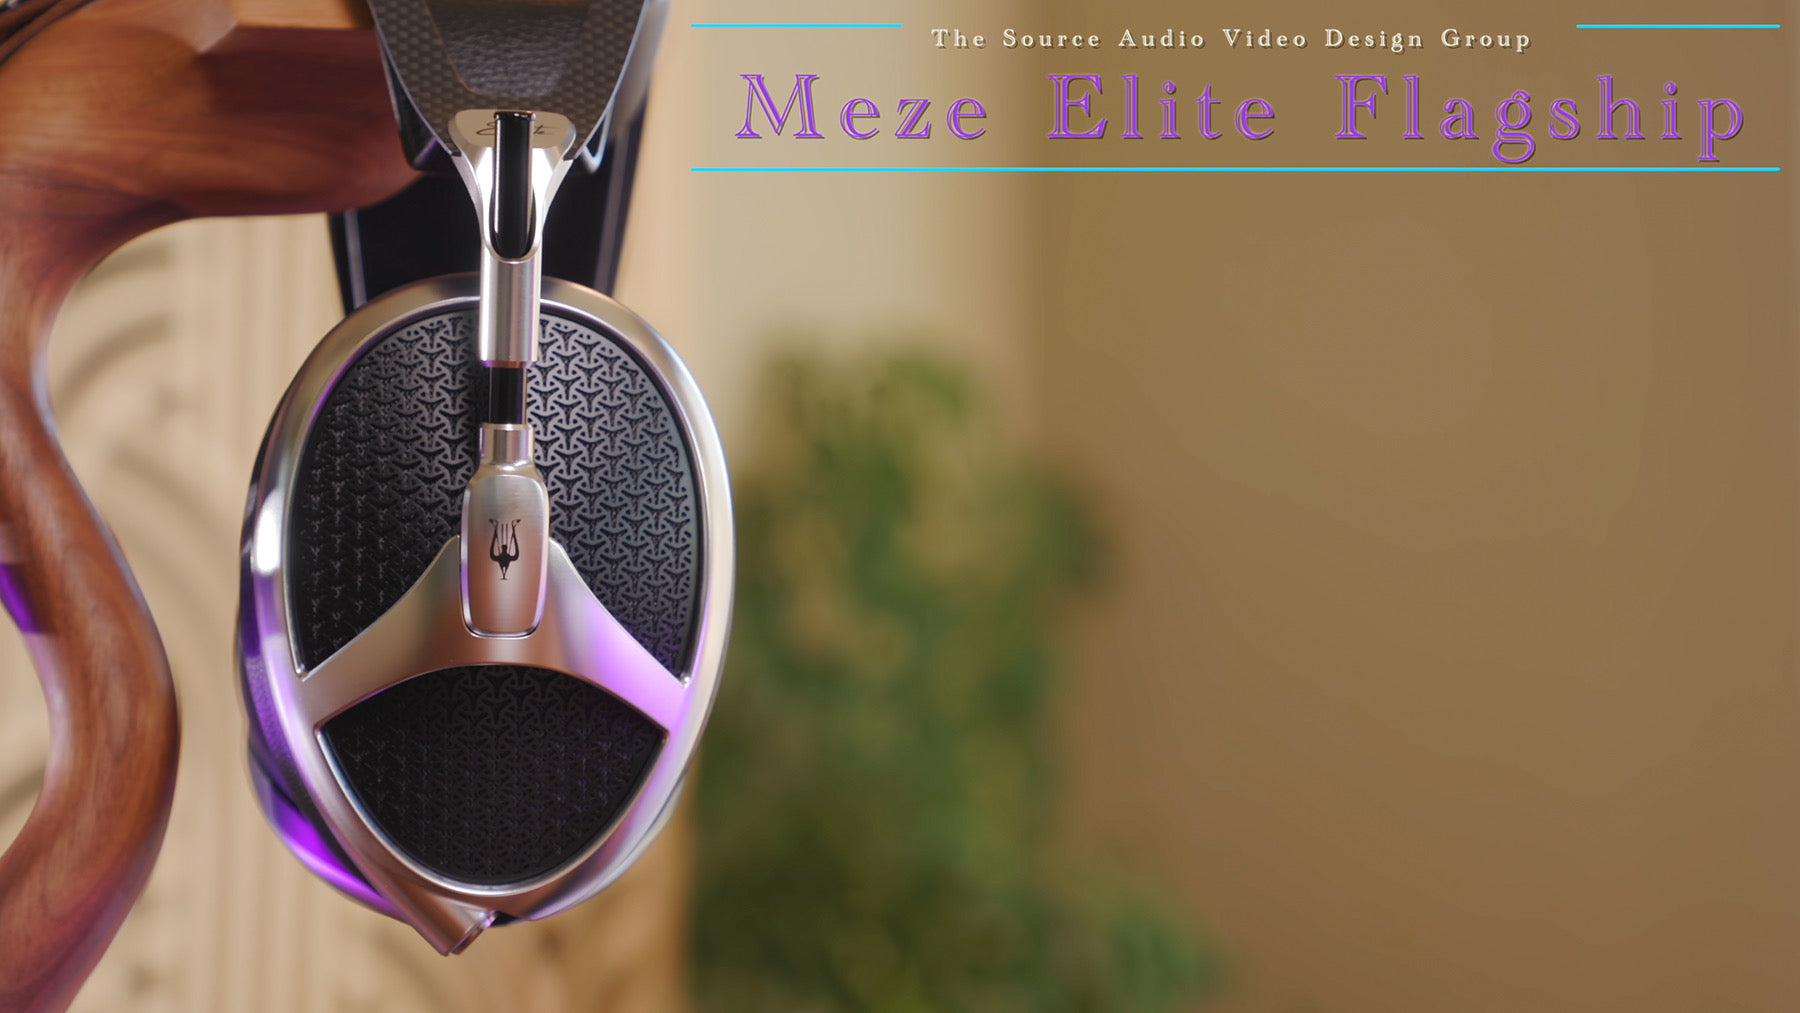 Meze Elite Flagship Planar Magnetic Headphones - The Source AV